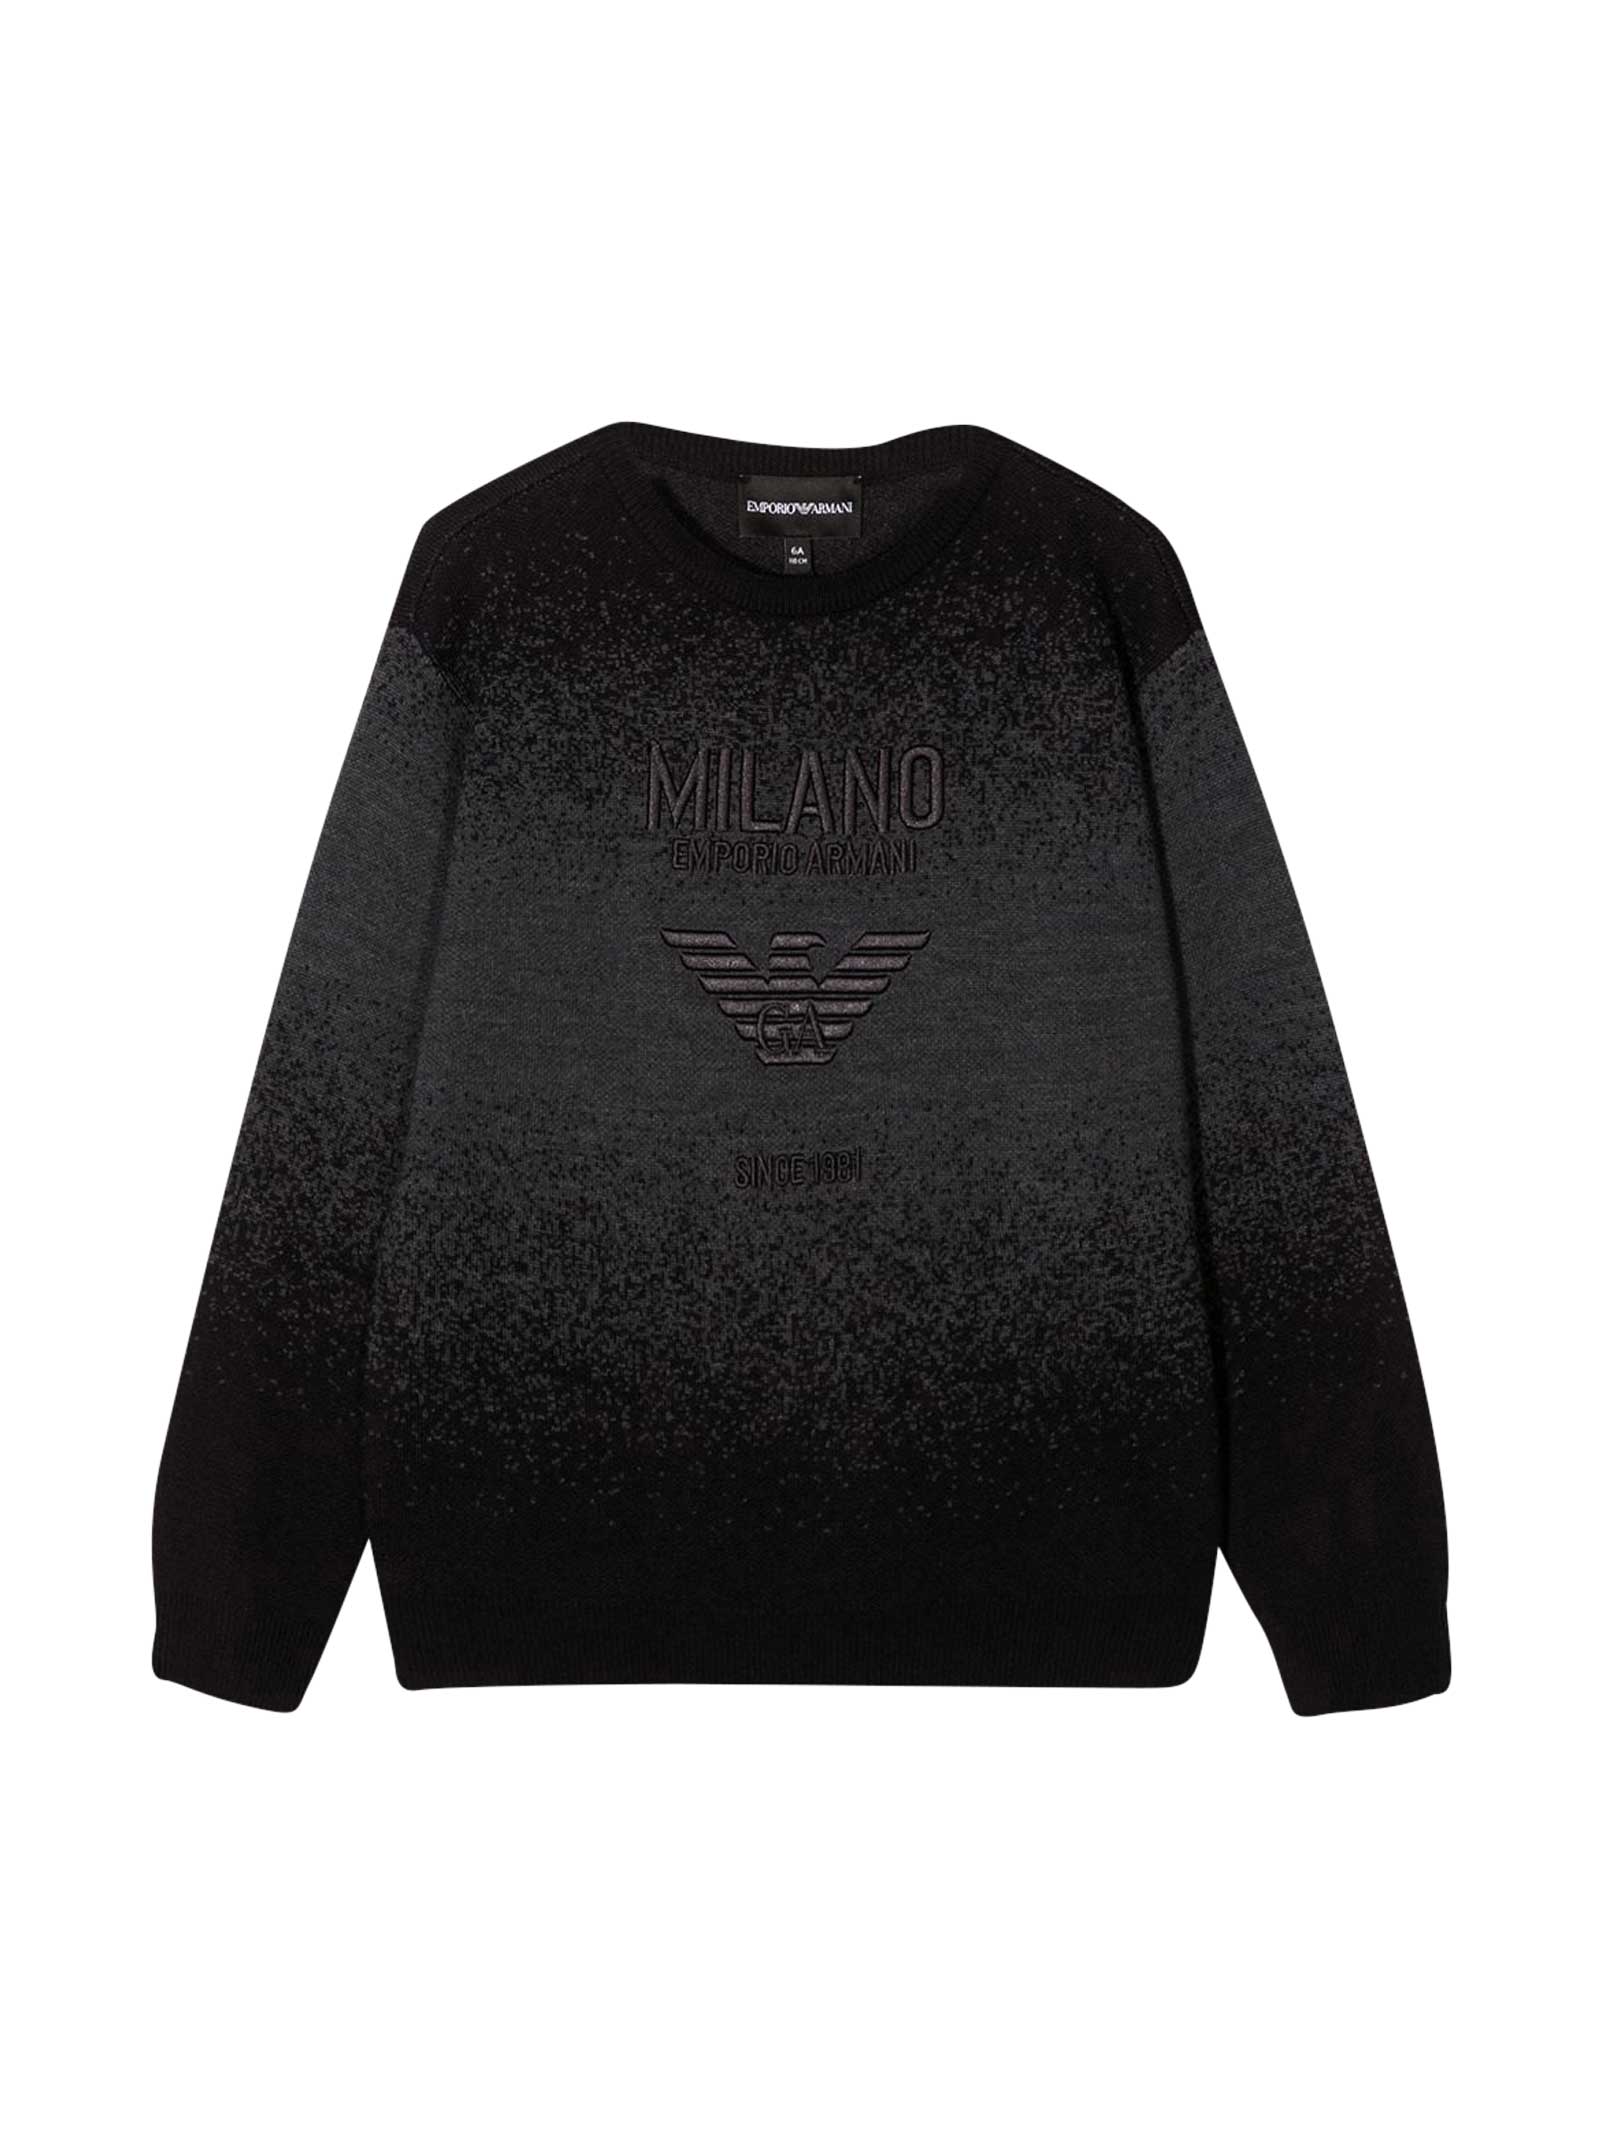 Emporio Armani Black Sweatshirt